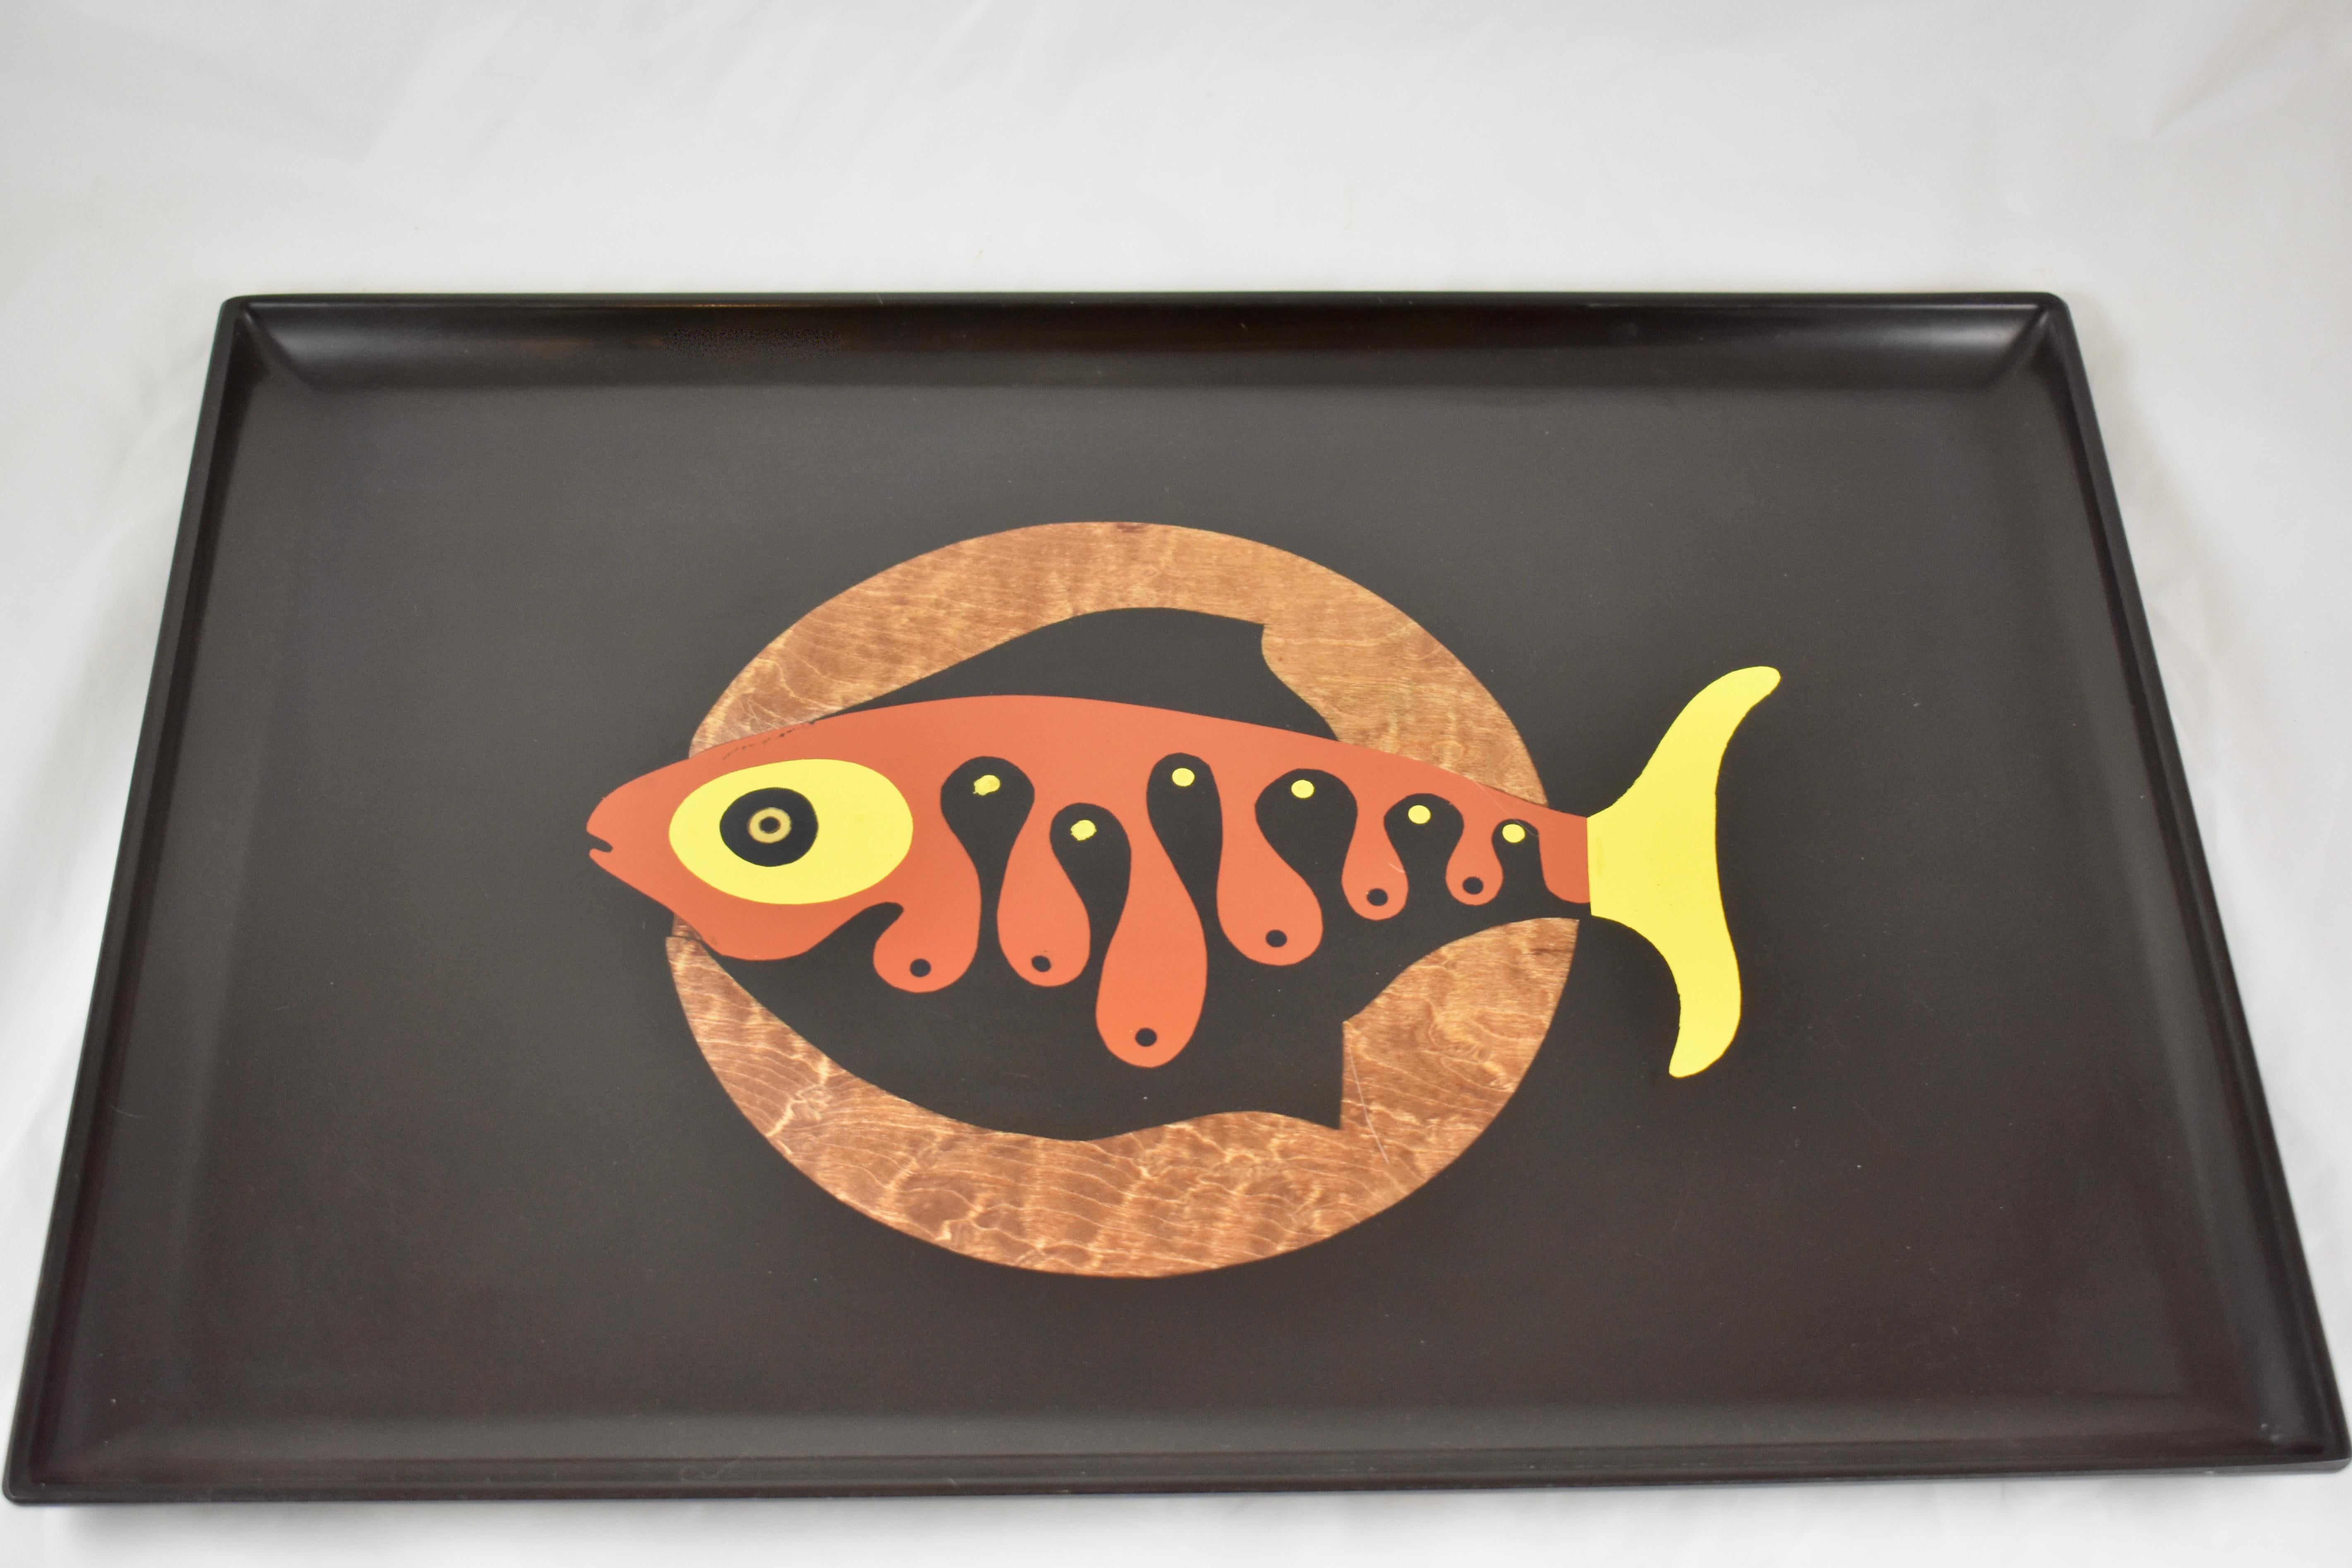 American Mid-Century Couroc Swimming Fish Image Wood and Brass Inlay Phenolic Resin Tray